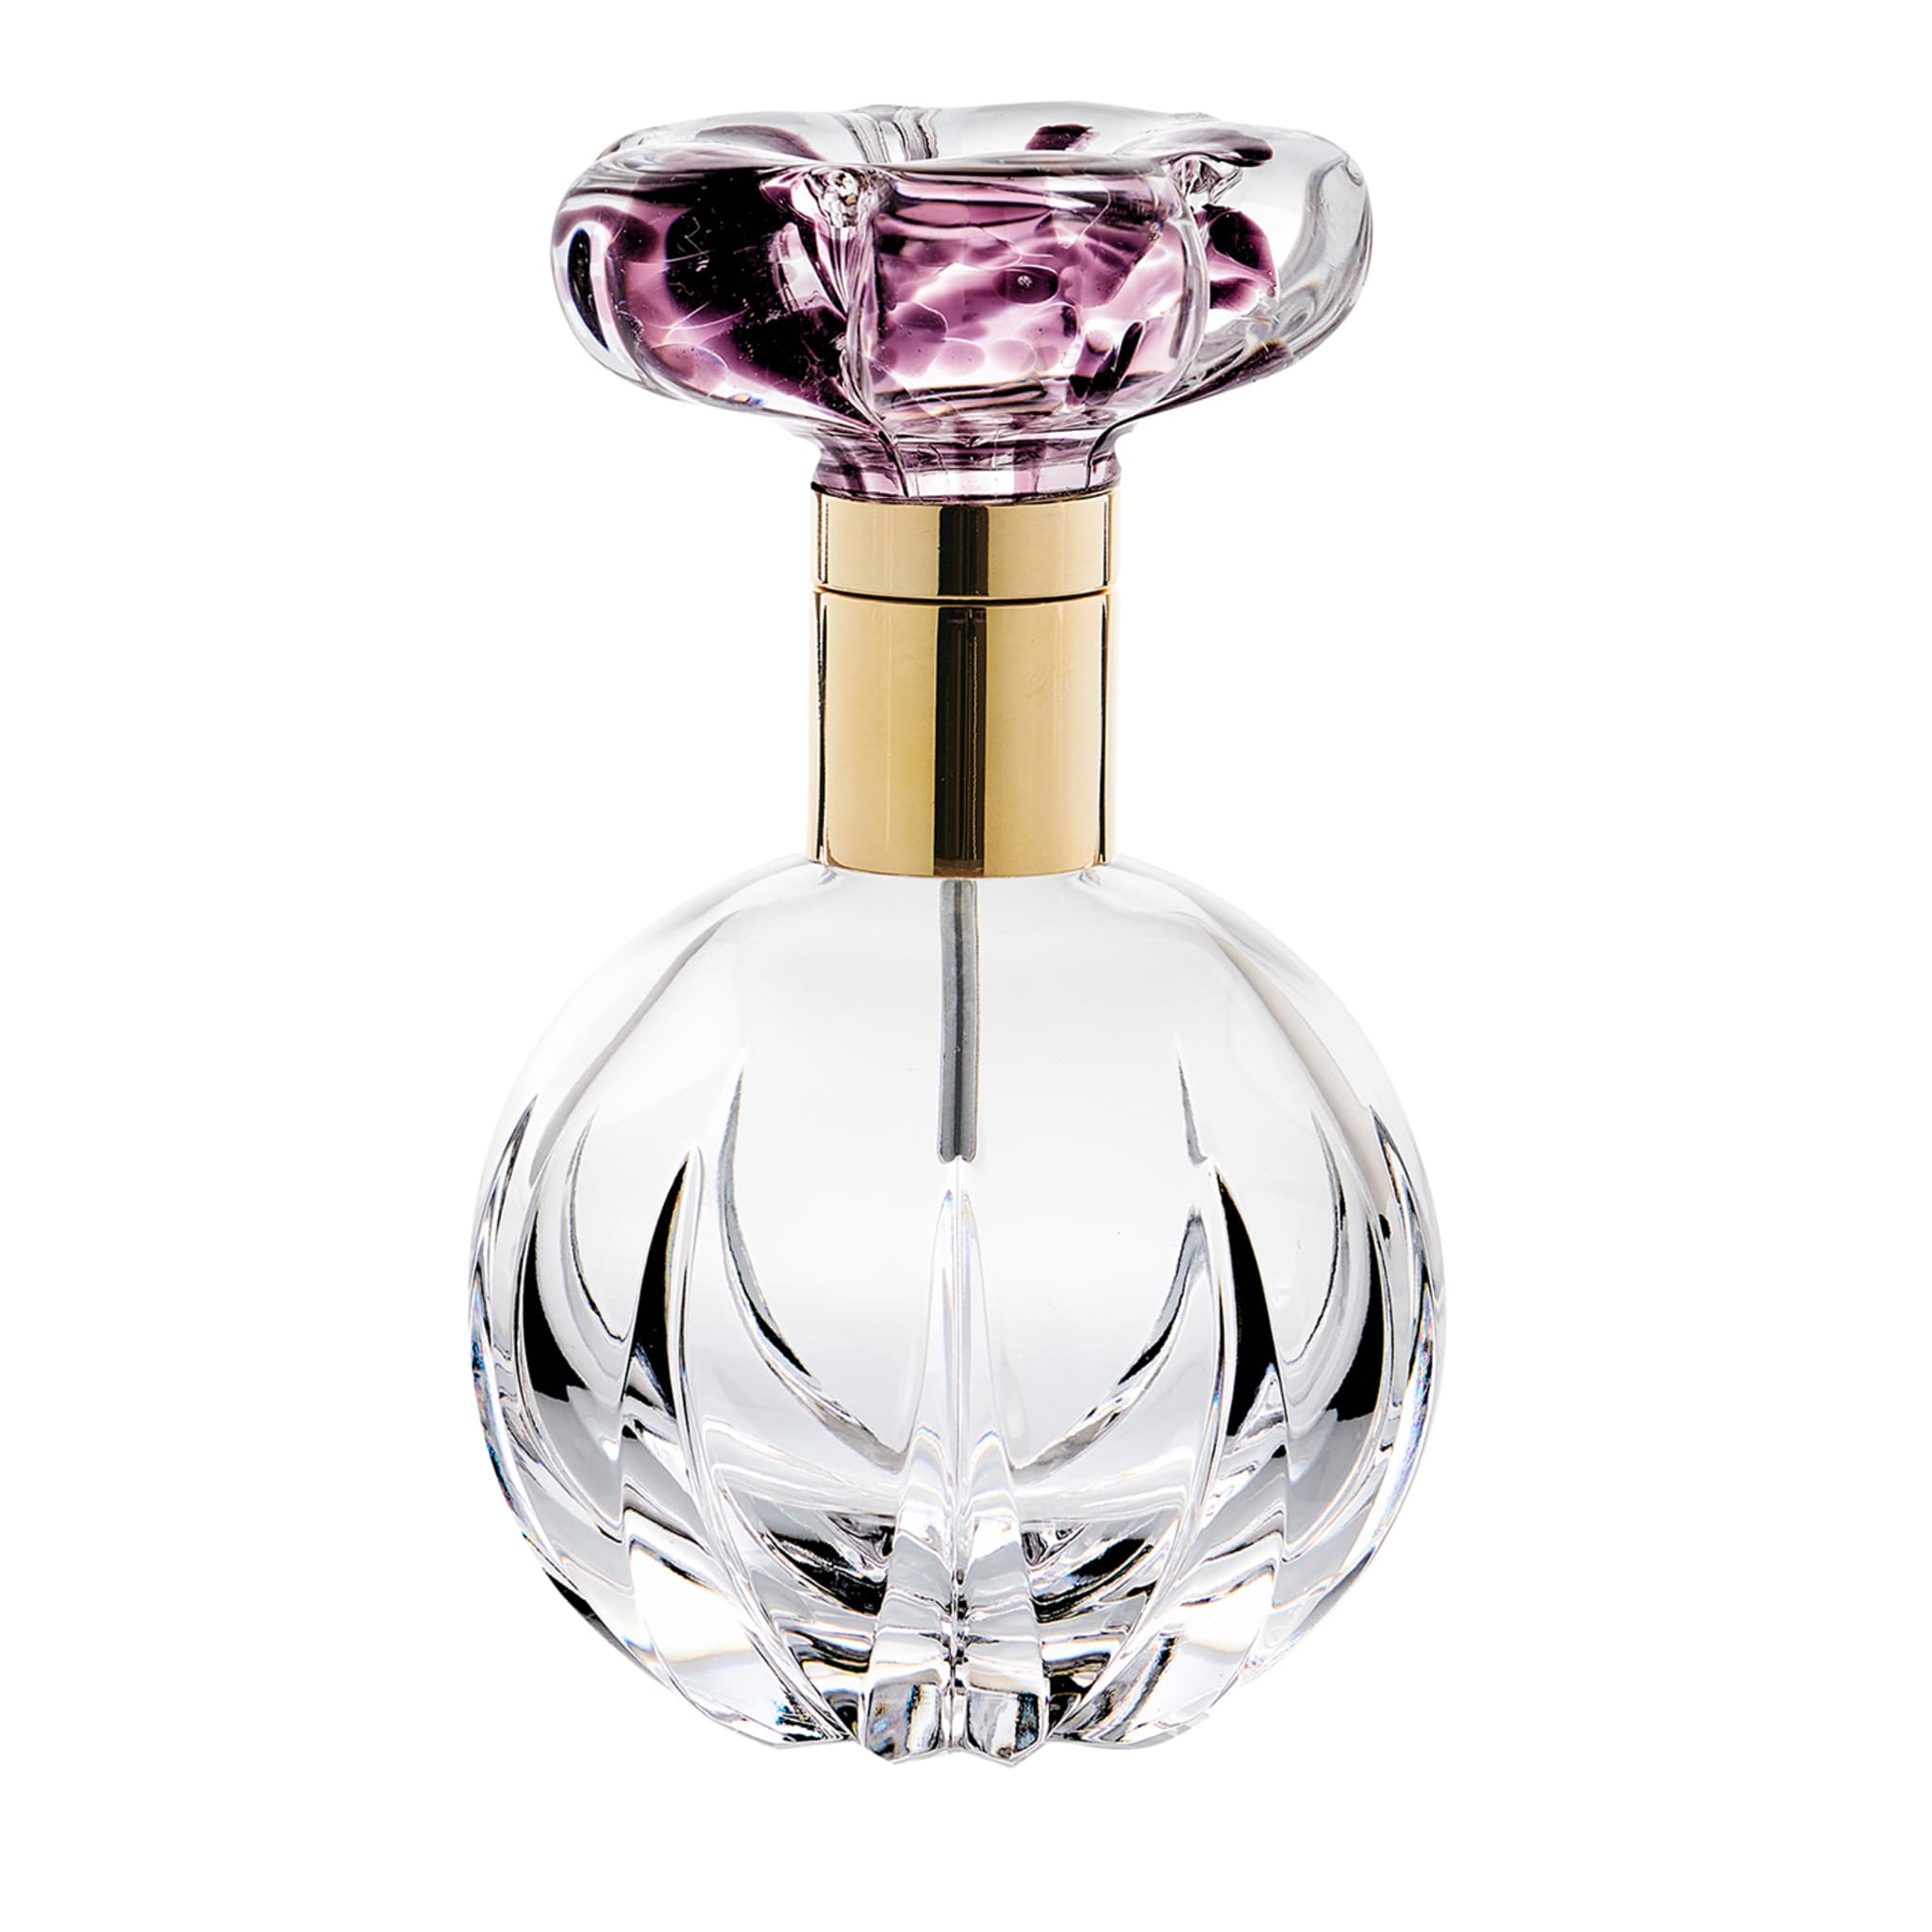 Cistus perfume bottle with amethyst flower - Main view